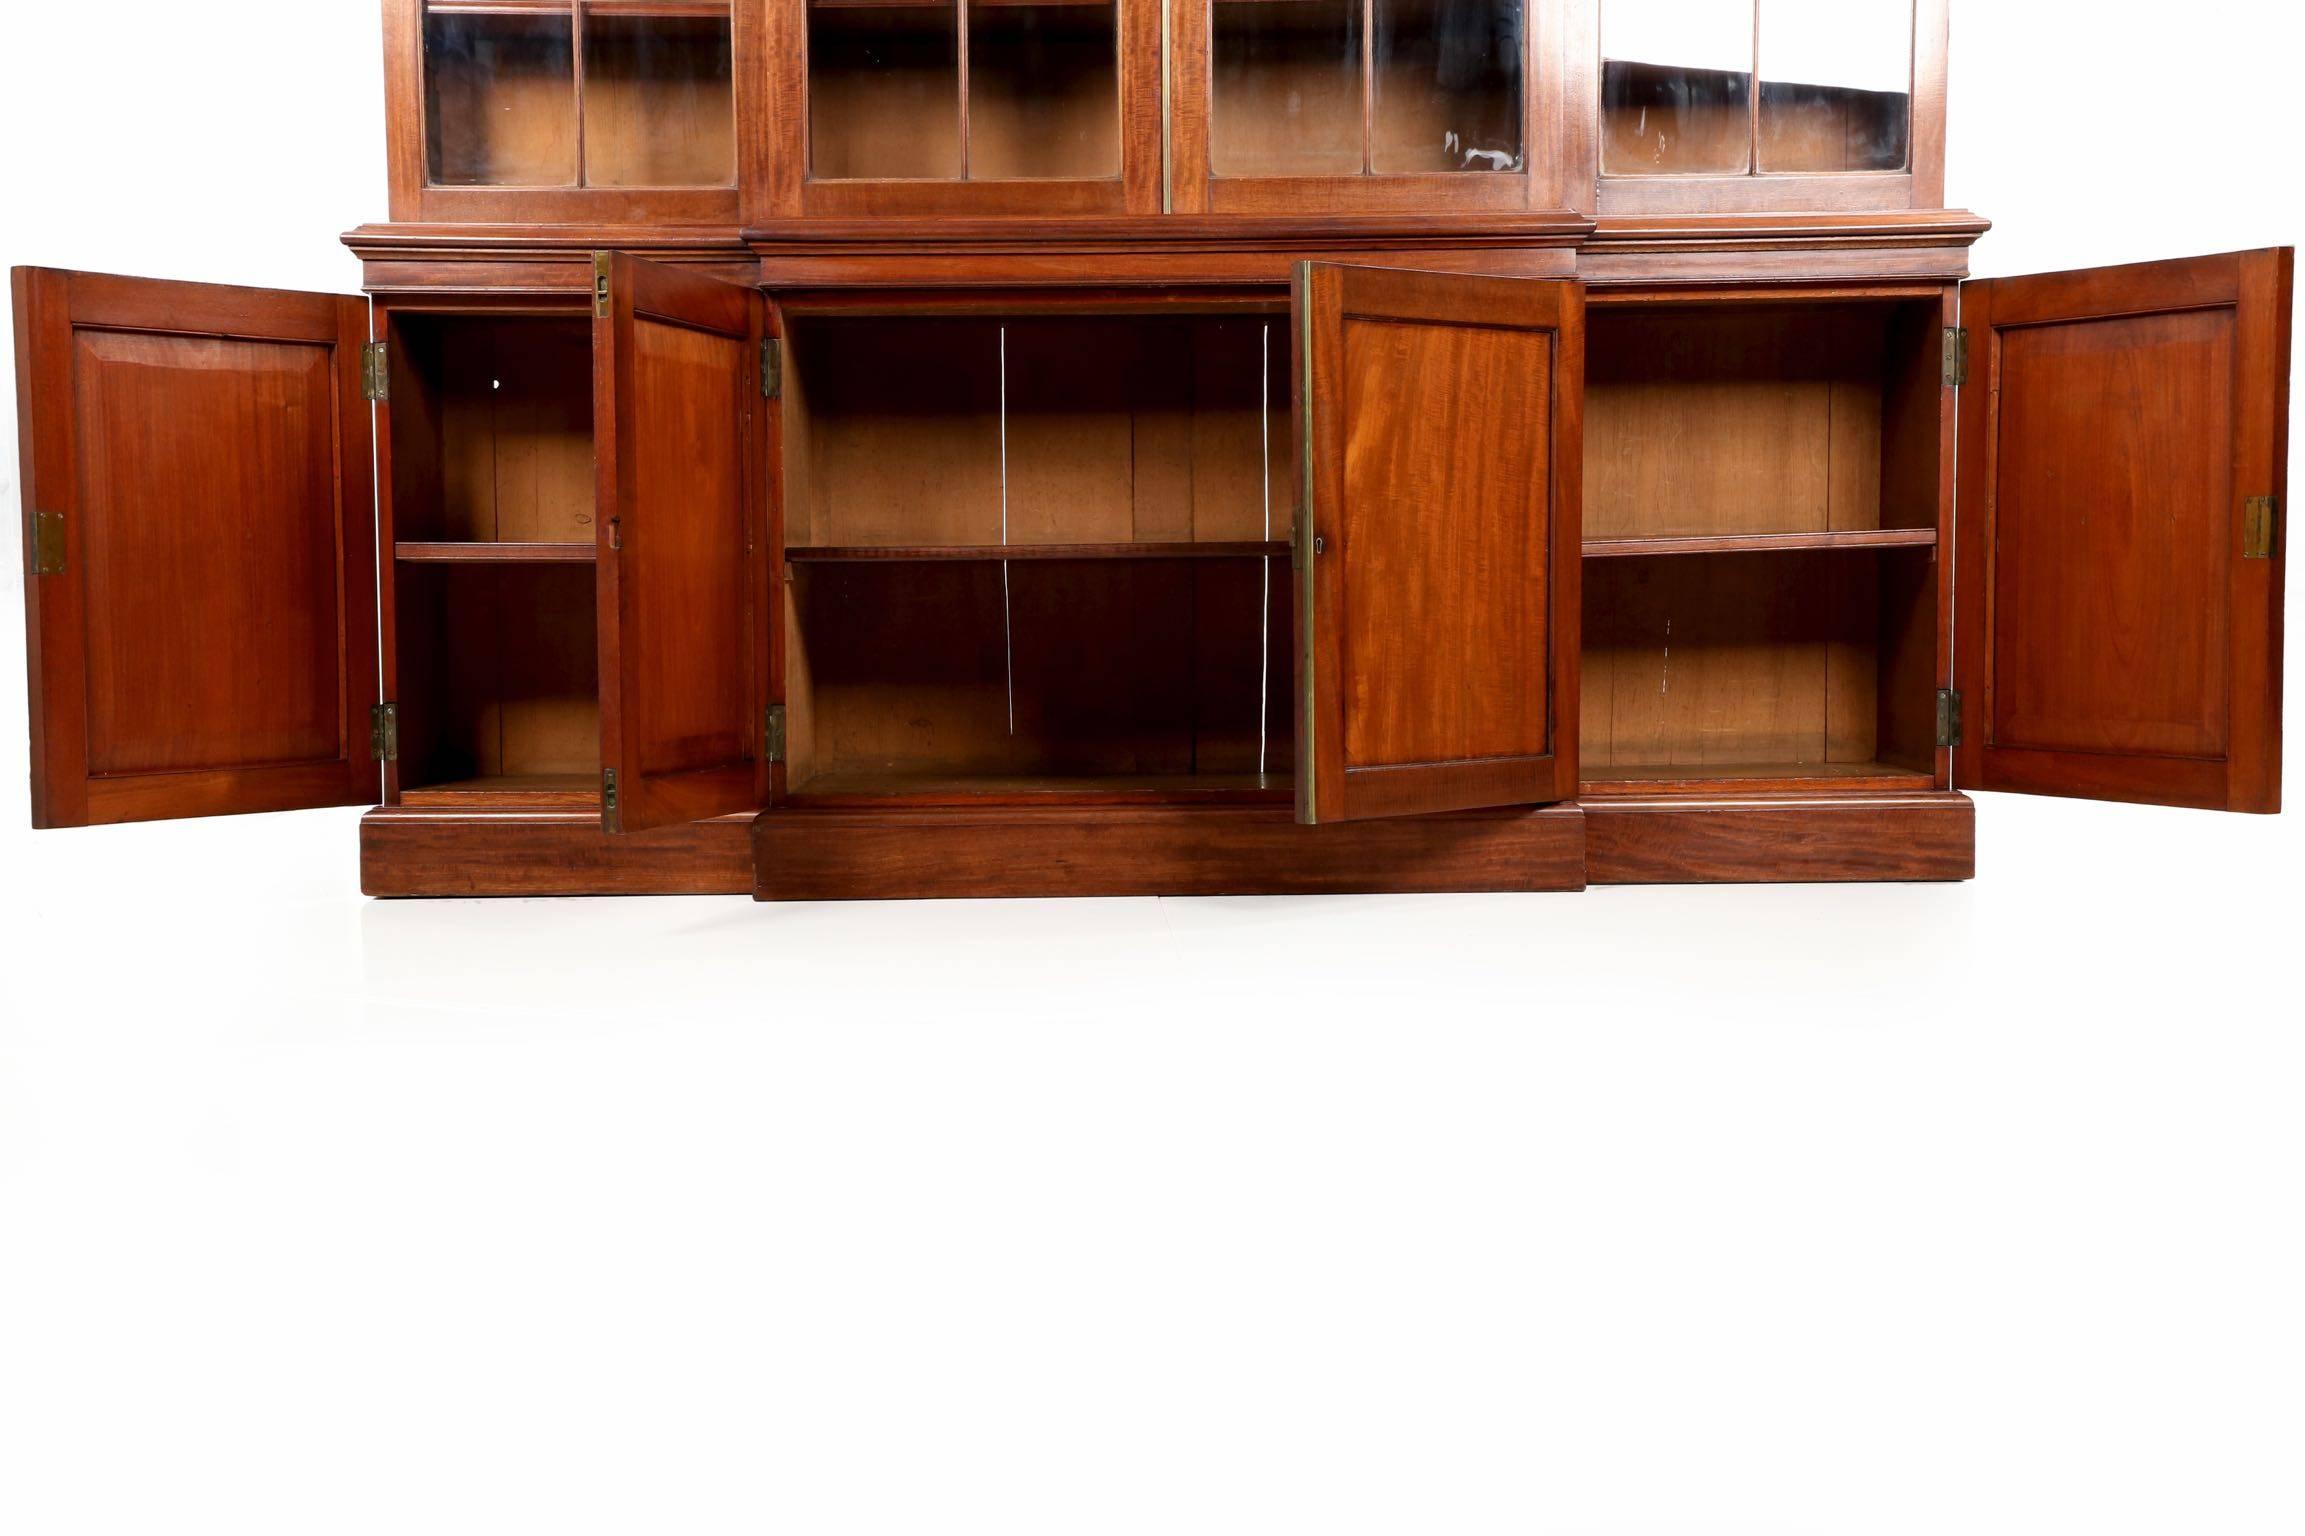 19th Century American Federal Mahogany Library Bookcase Breakfront Cabinet, circa 1795-1815